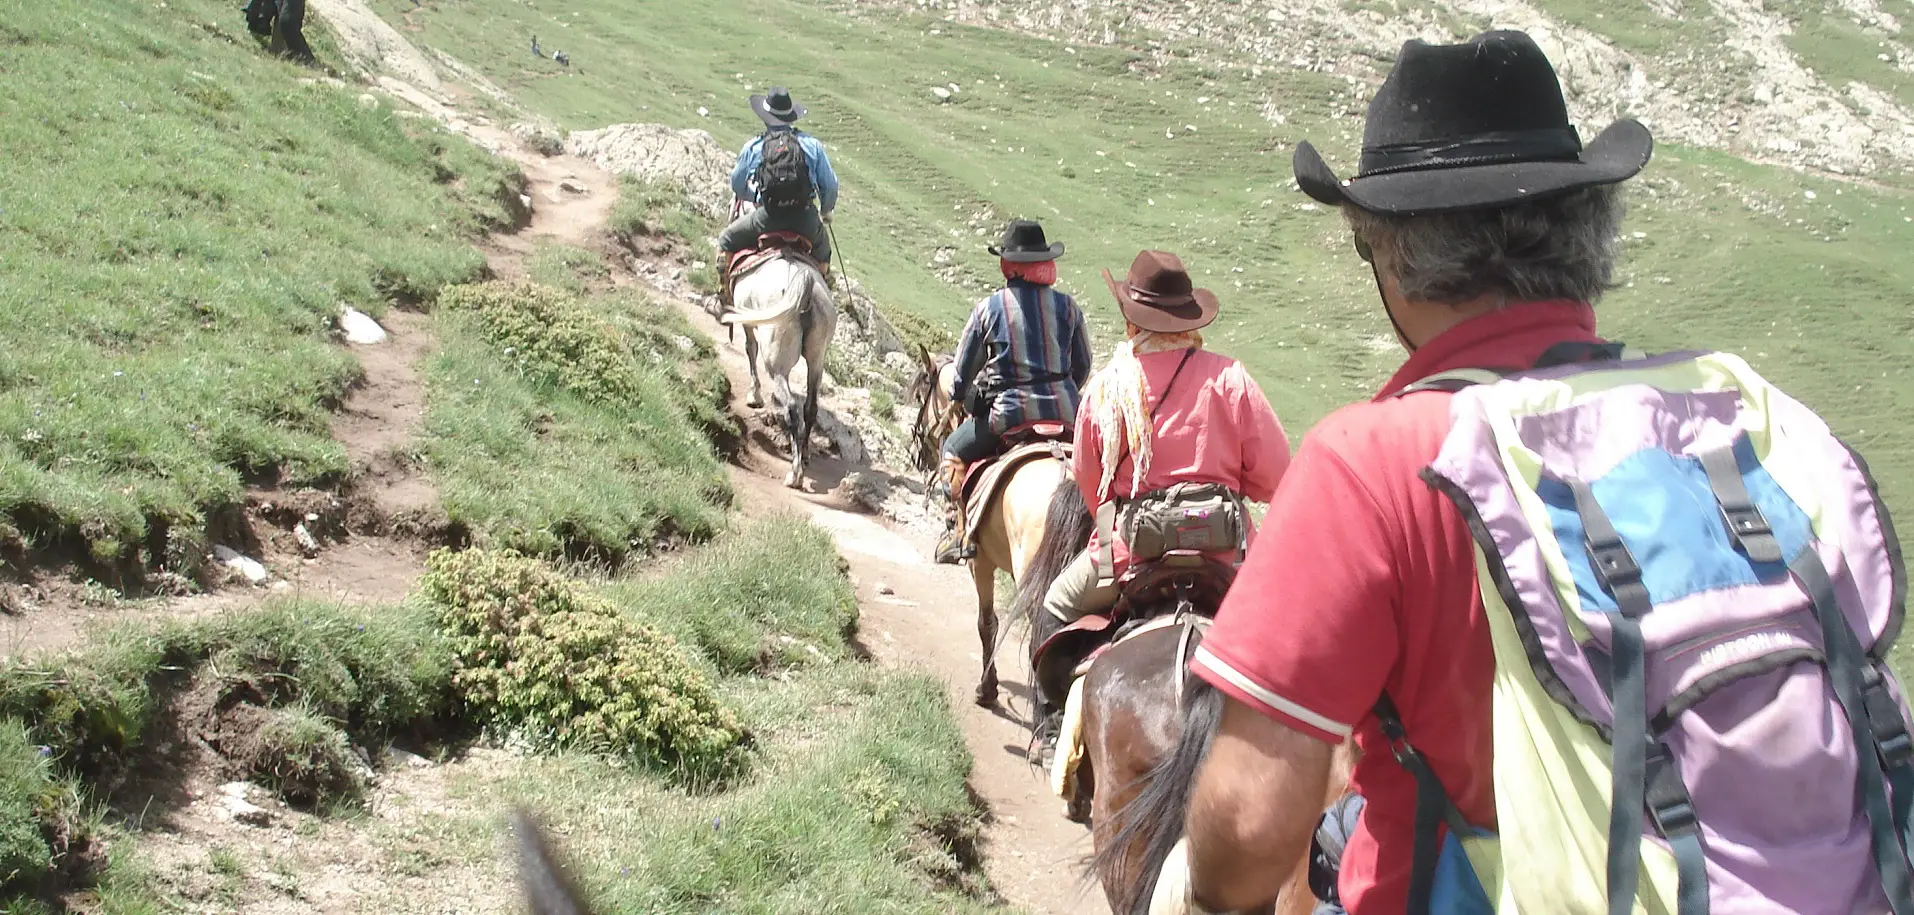 Horseback Riding Tour Around Mount Damavand